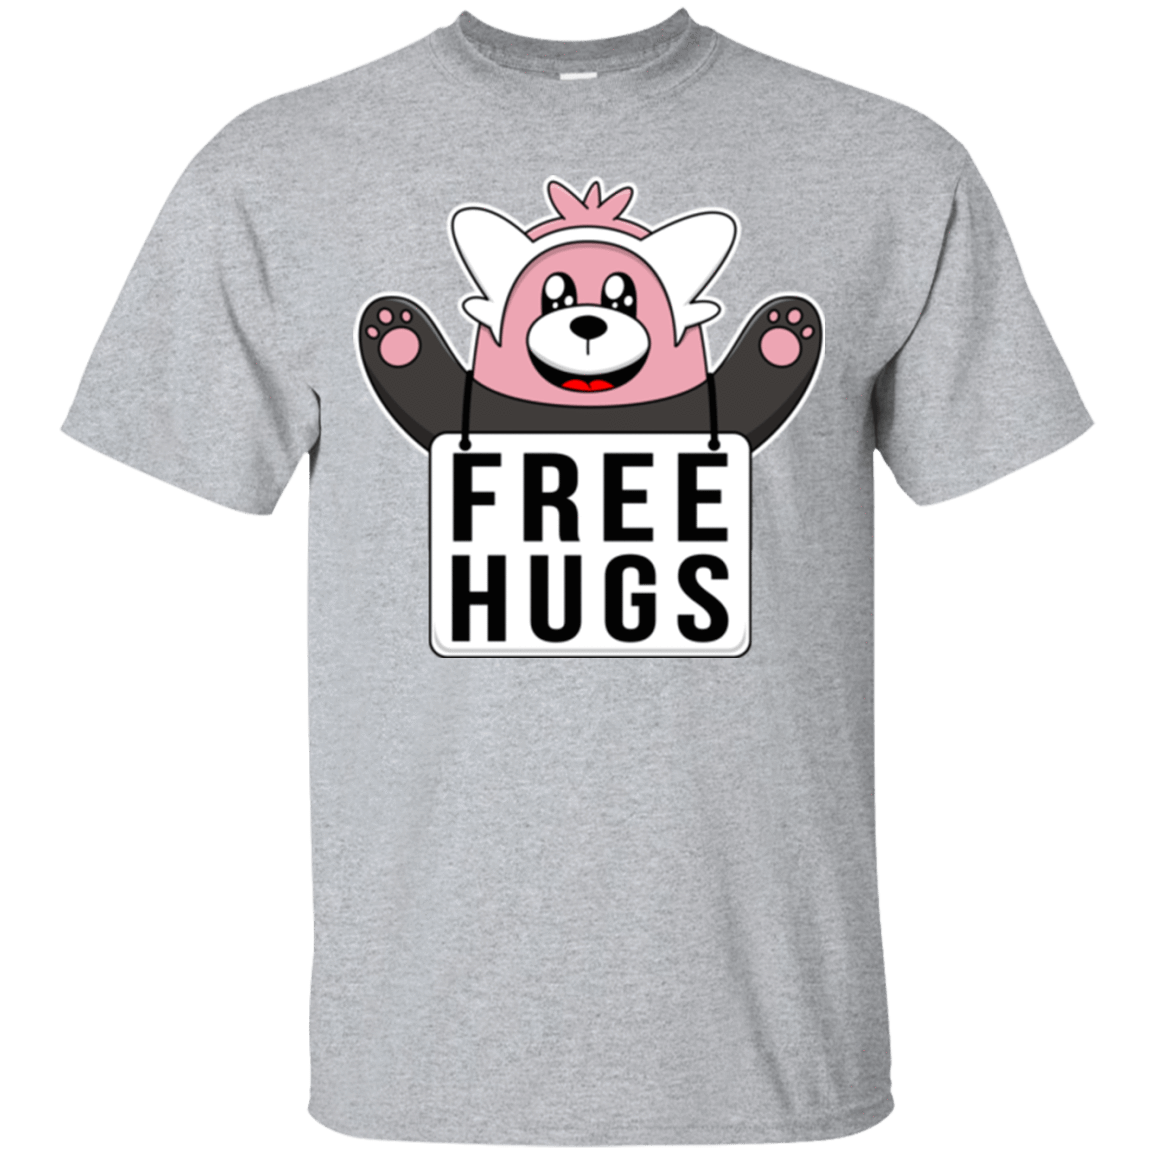 T-Shirts Sport Grey / Small Free Hugs T-Shirt